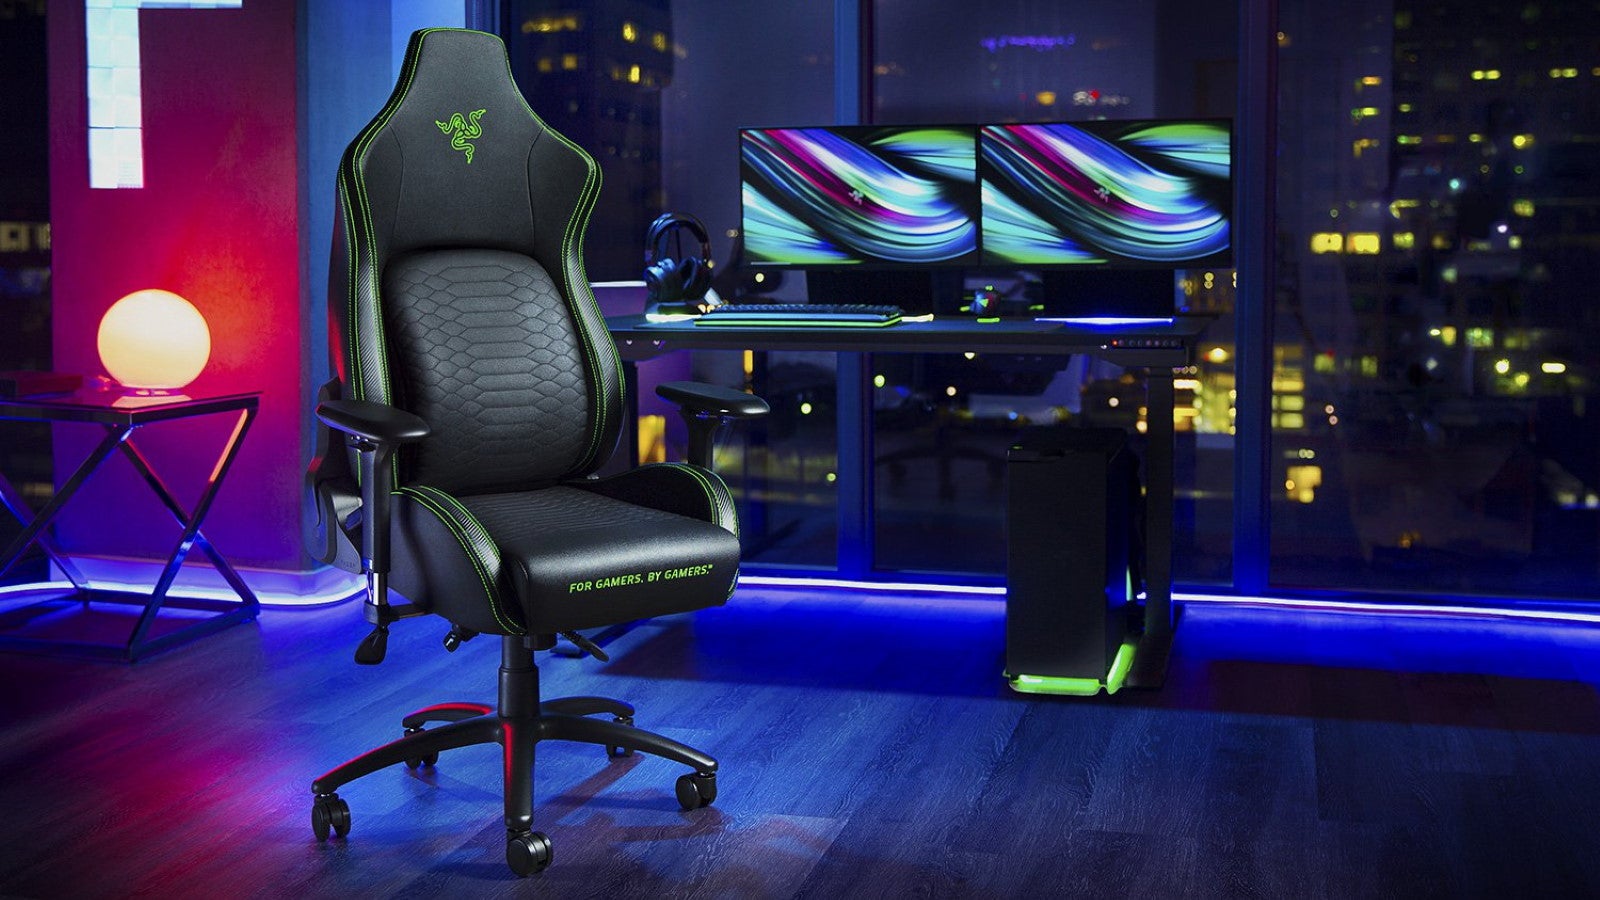 Razer's Iskur gaming chair